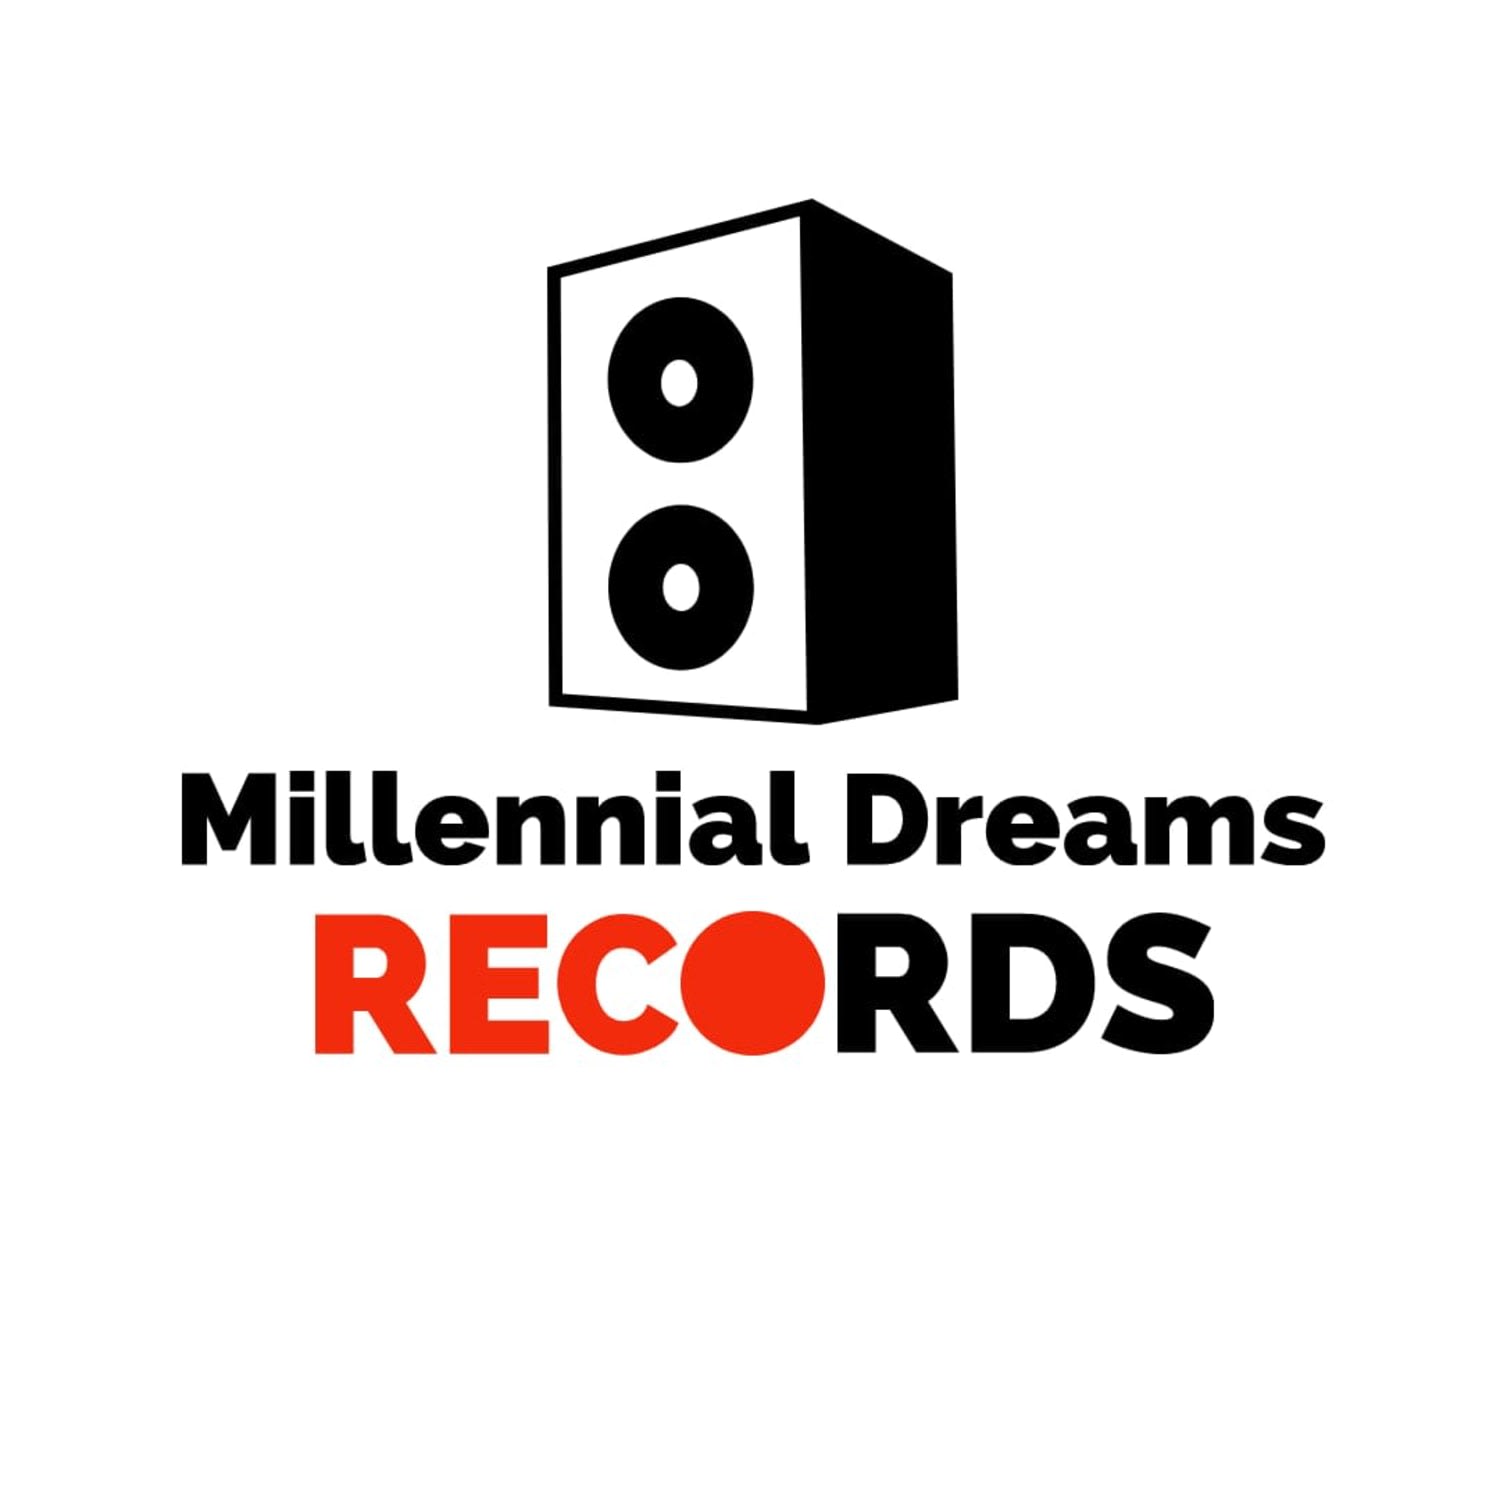 Millennial Dreams Records